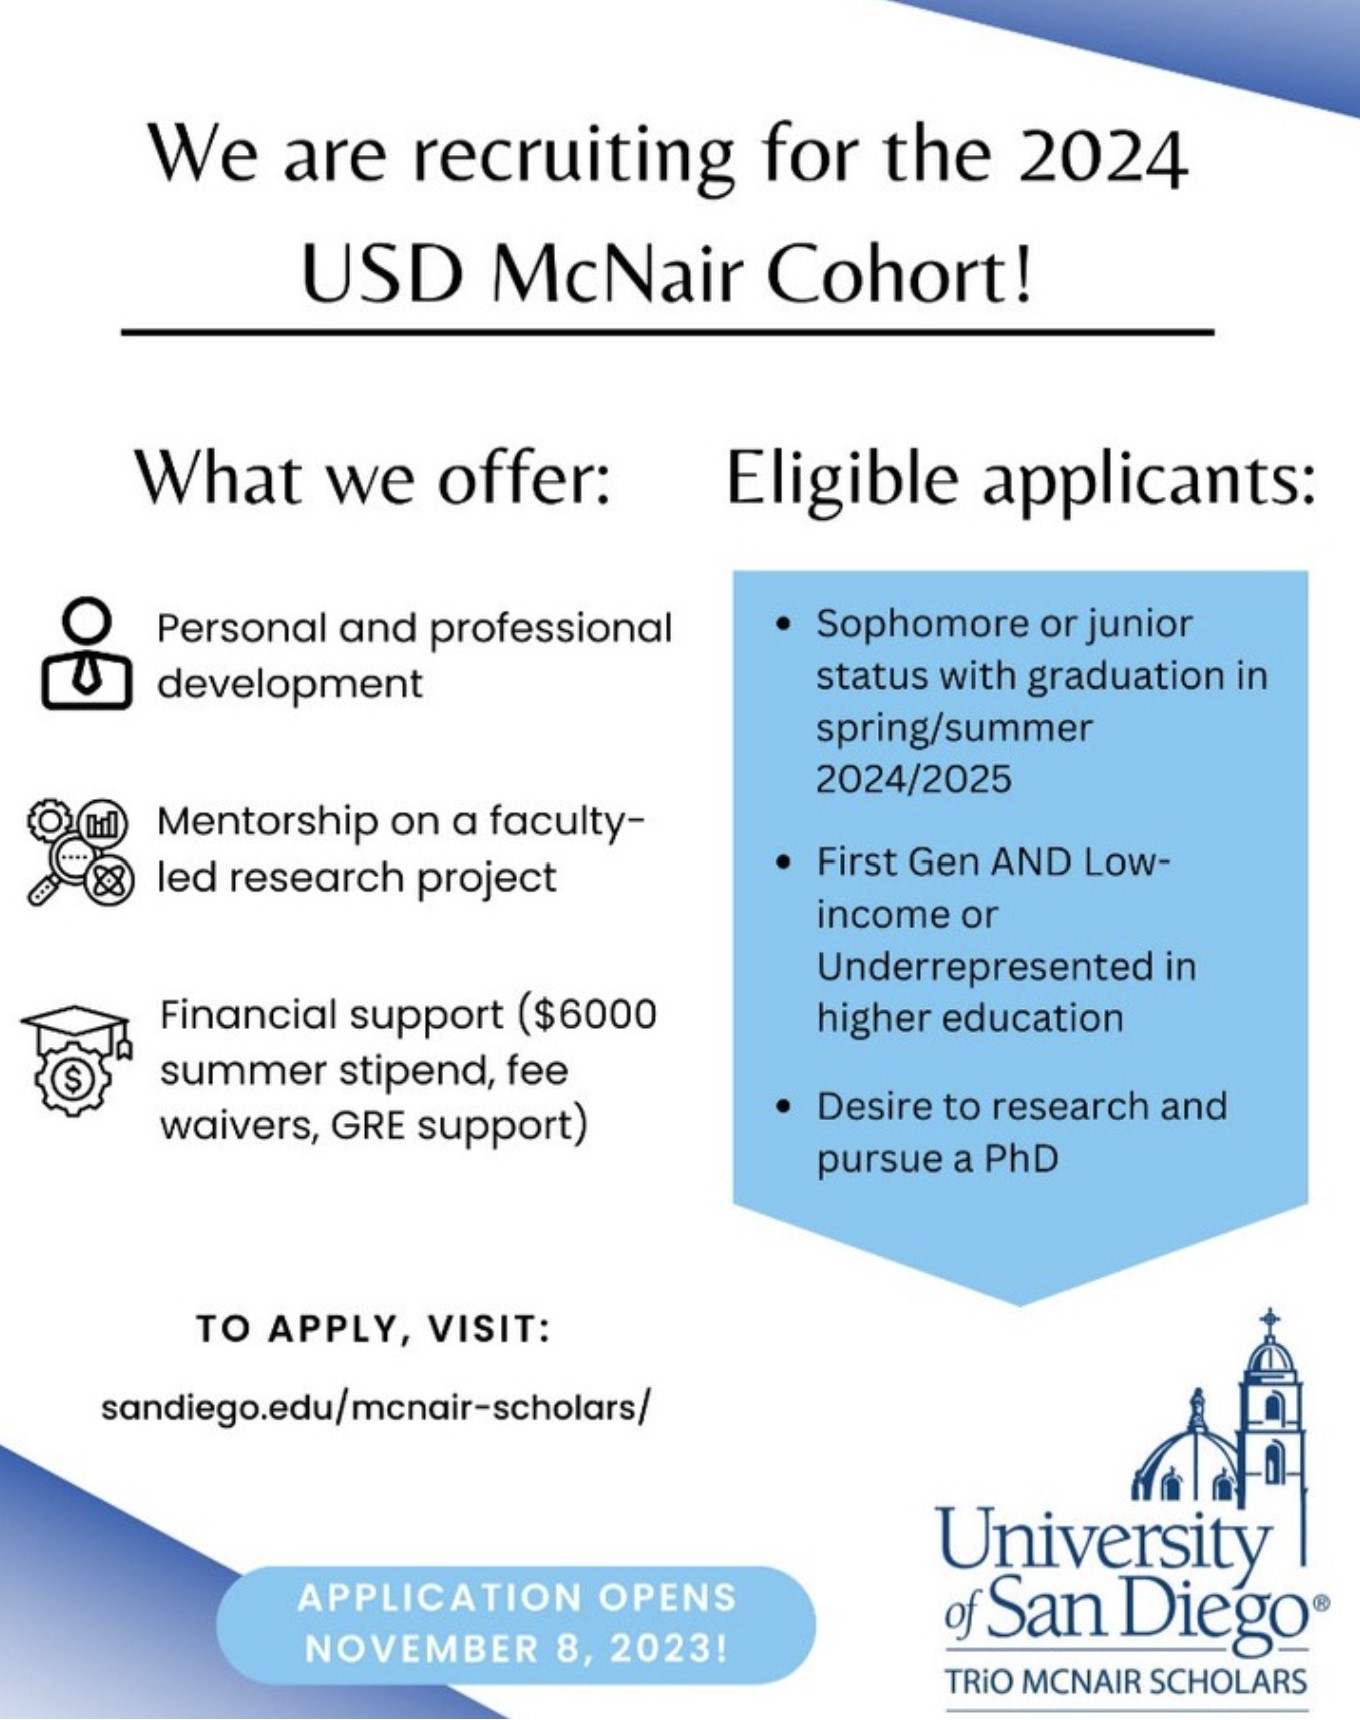 USD McNair Cohort 2024 Application Opens Online